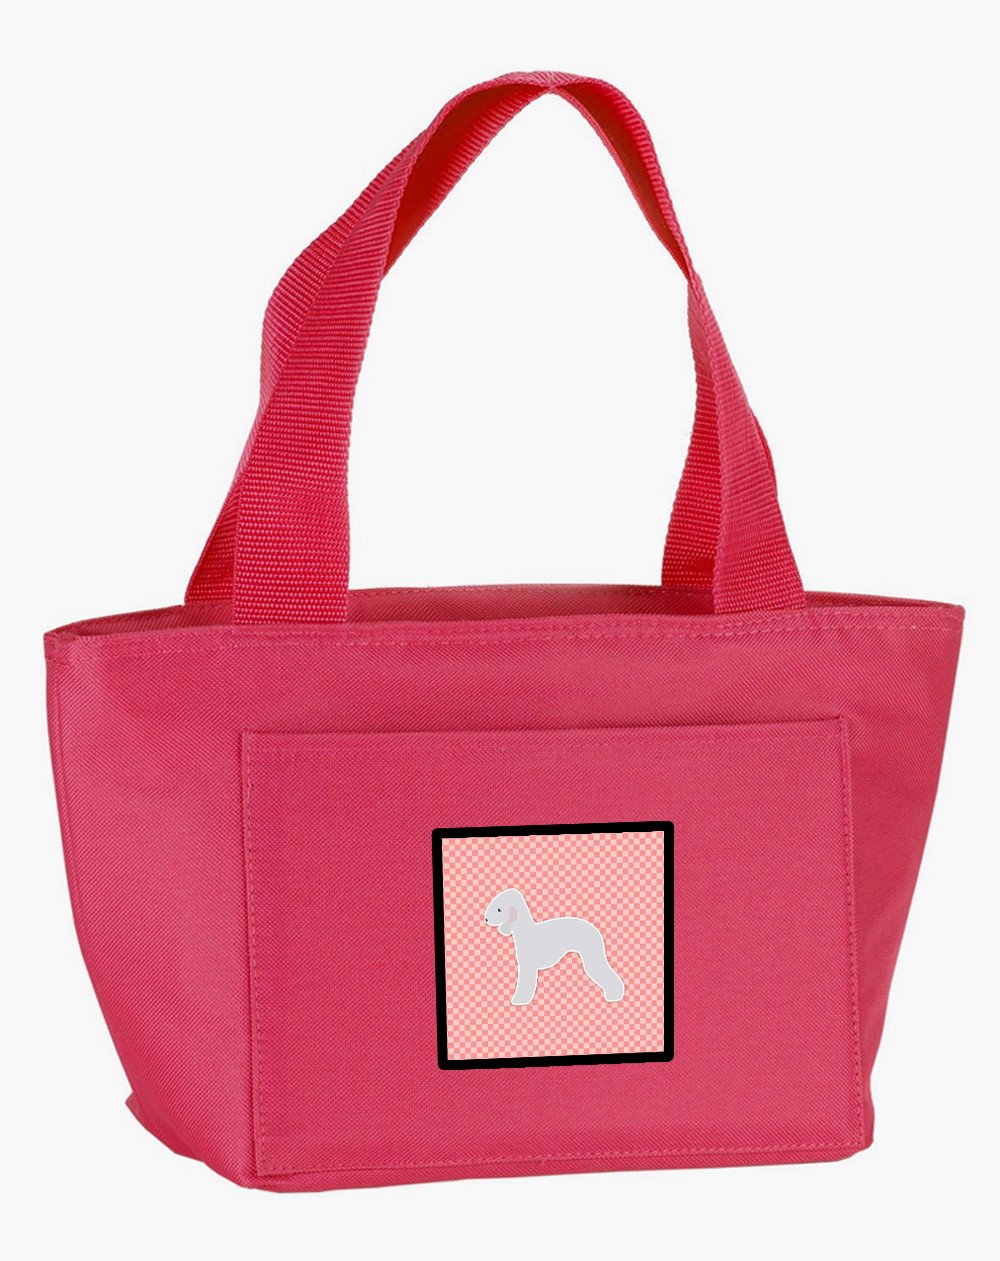 Bedlington Terrier Checkerboard Pink Lunch Bag BB3594PK-8808 by Caroline's Treasures